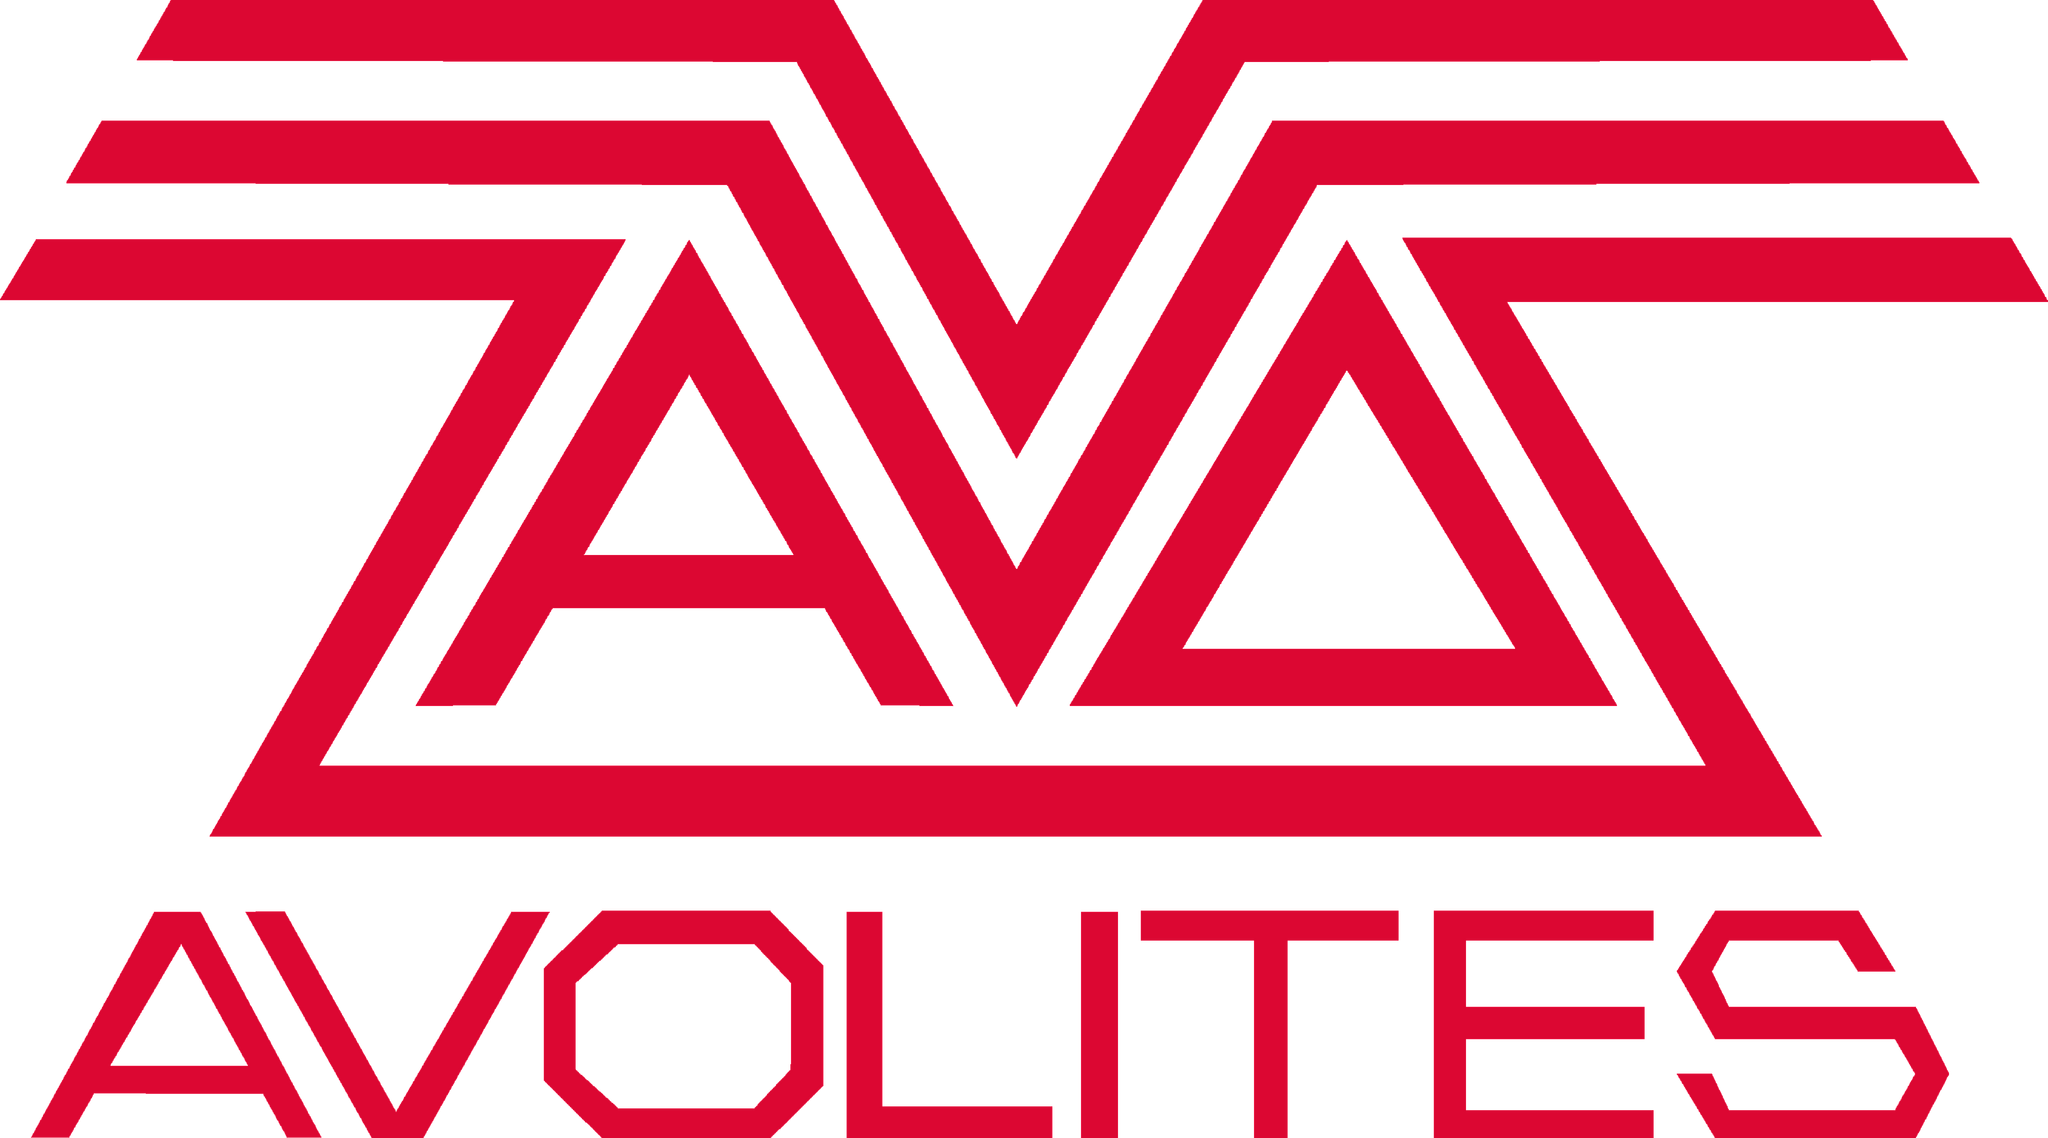 Avolites Ltd